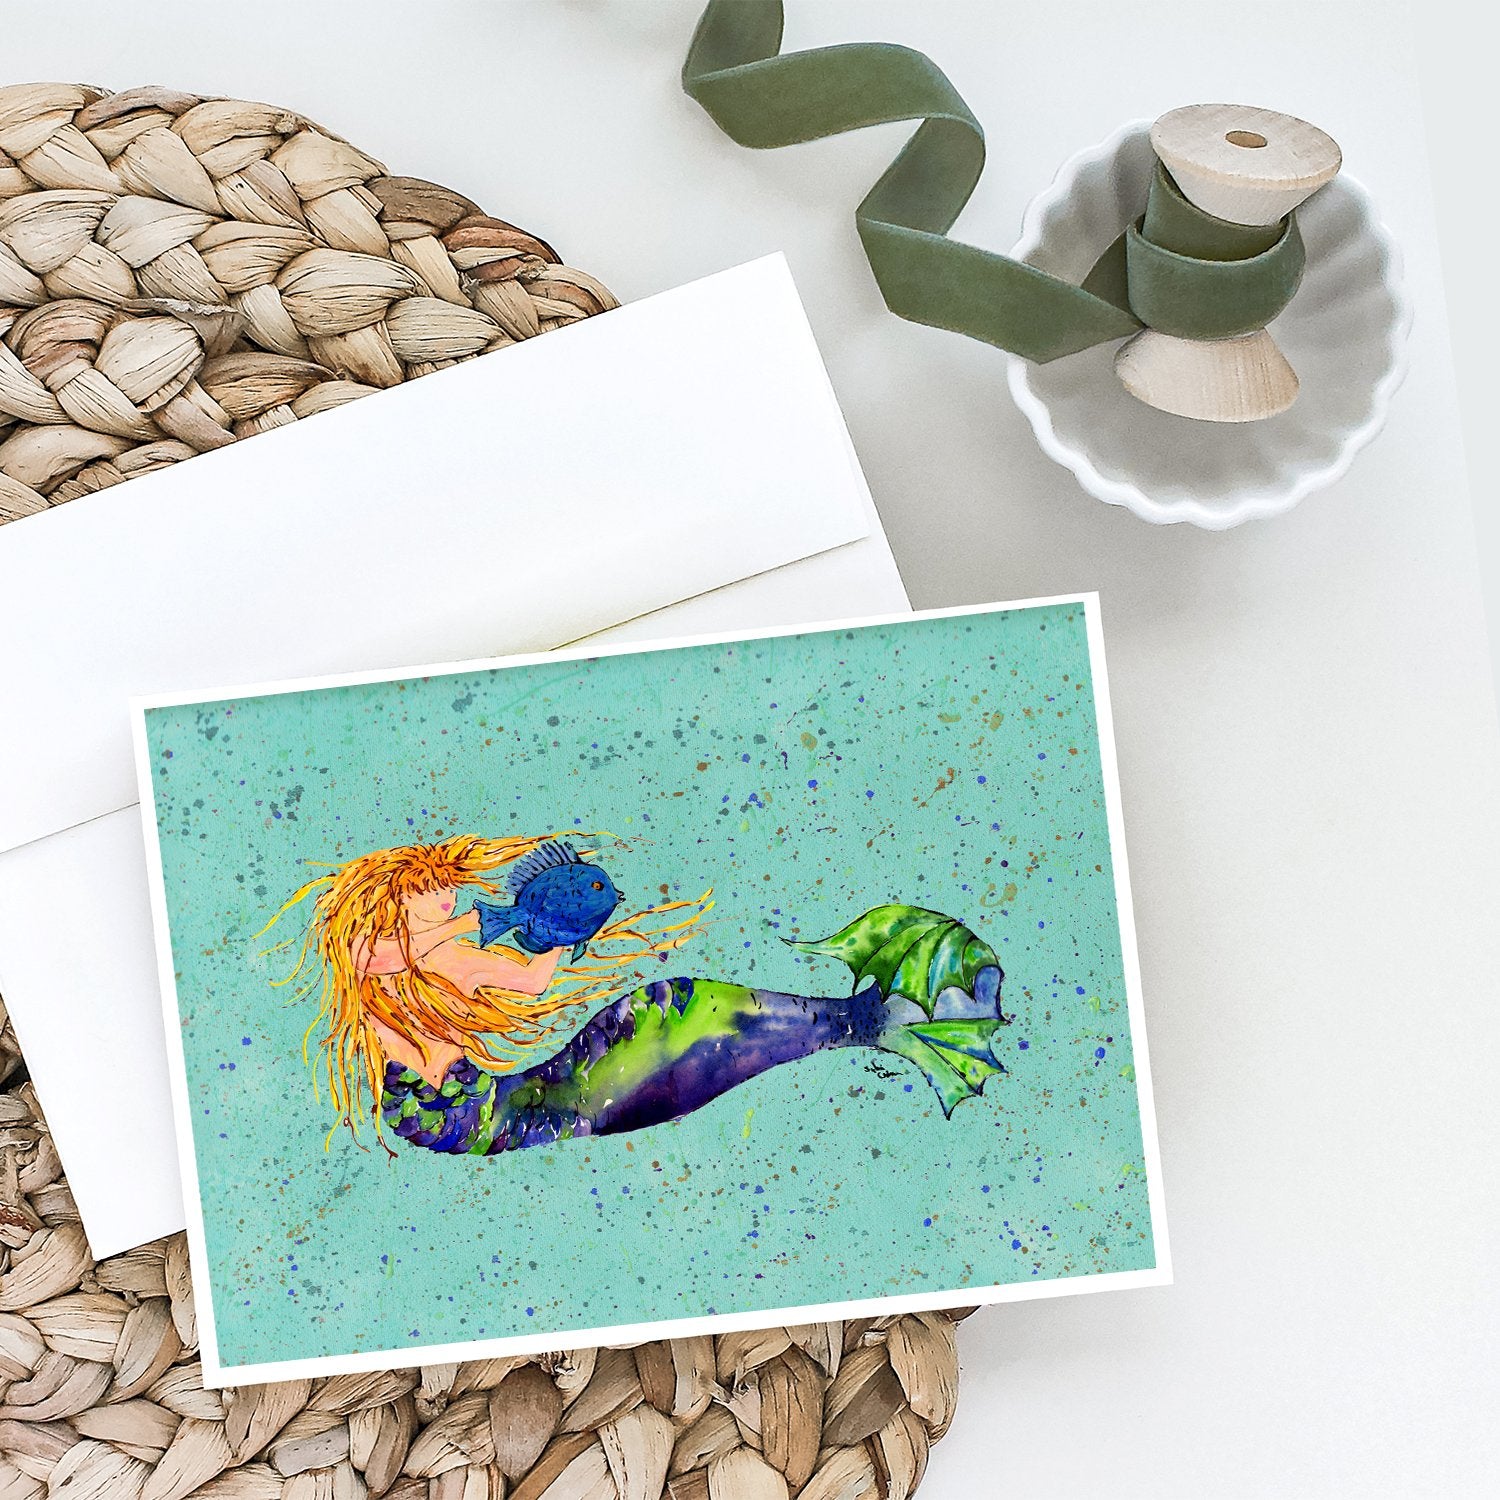 Buy this Blonde Mermaid on Teal Greeting Cards and Envelopes Pack of 8